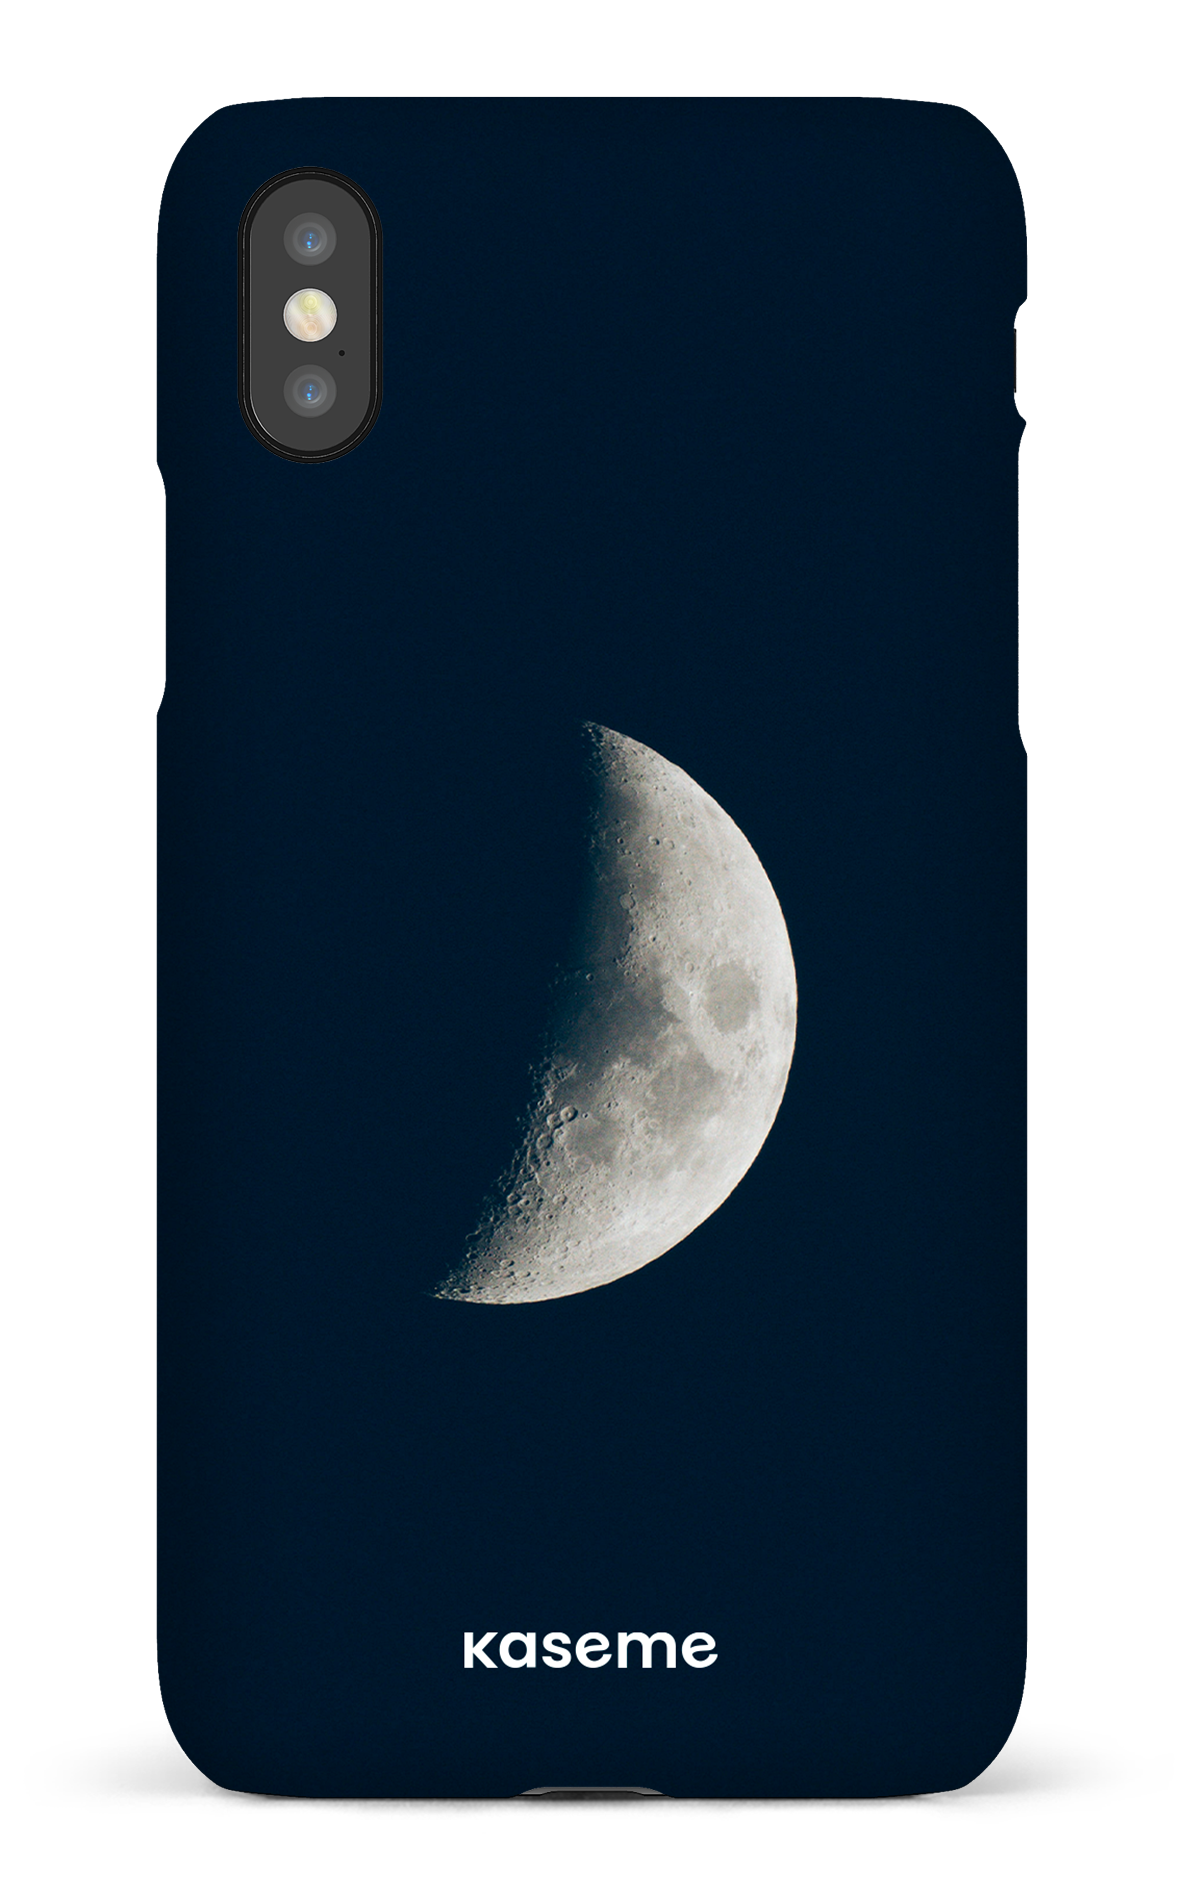 La Luna by Yulneverroamalone - iPhone X/Xs